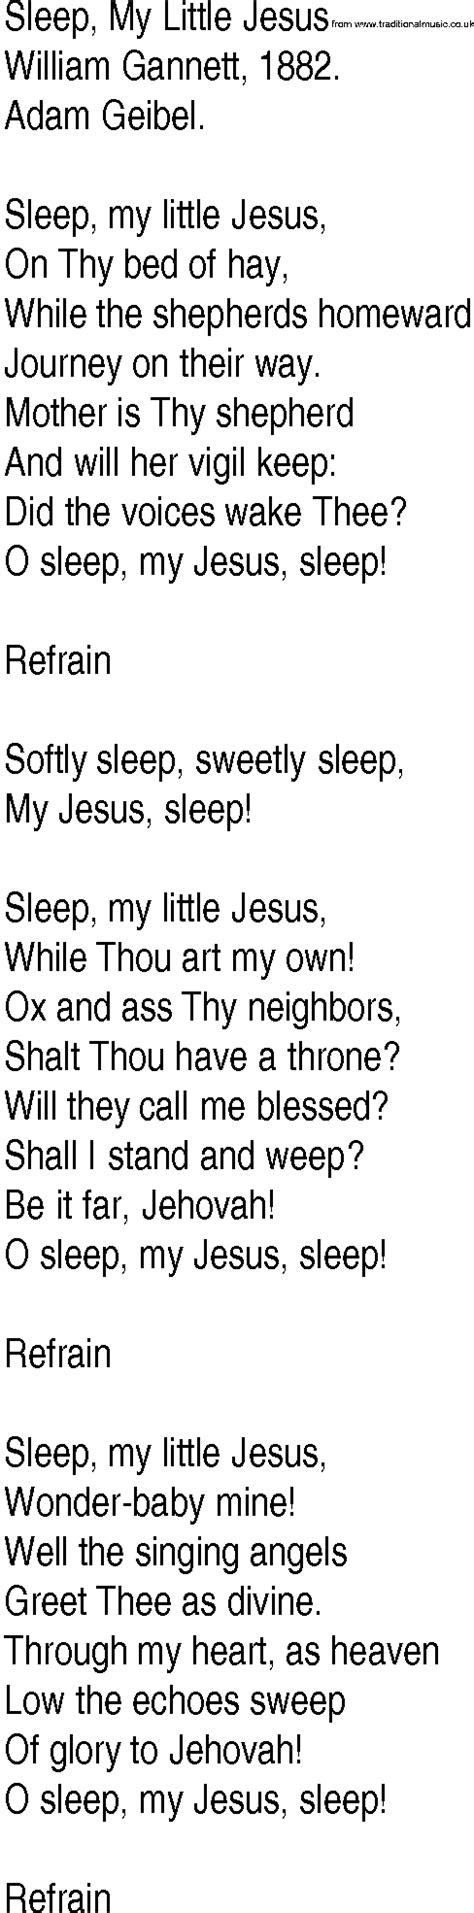 hymn  gospel song lyrics  sleep   jesus  william gannett